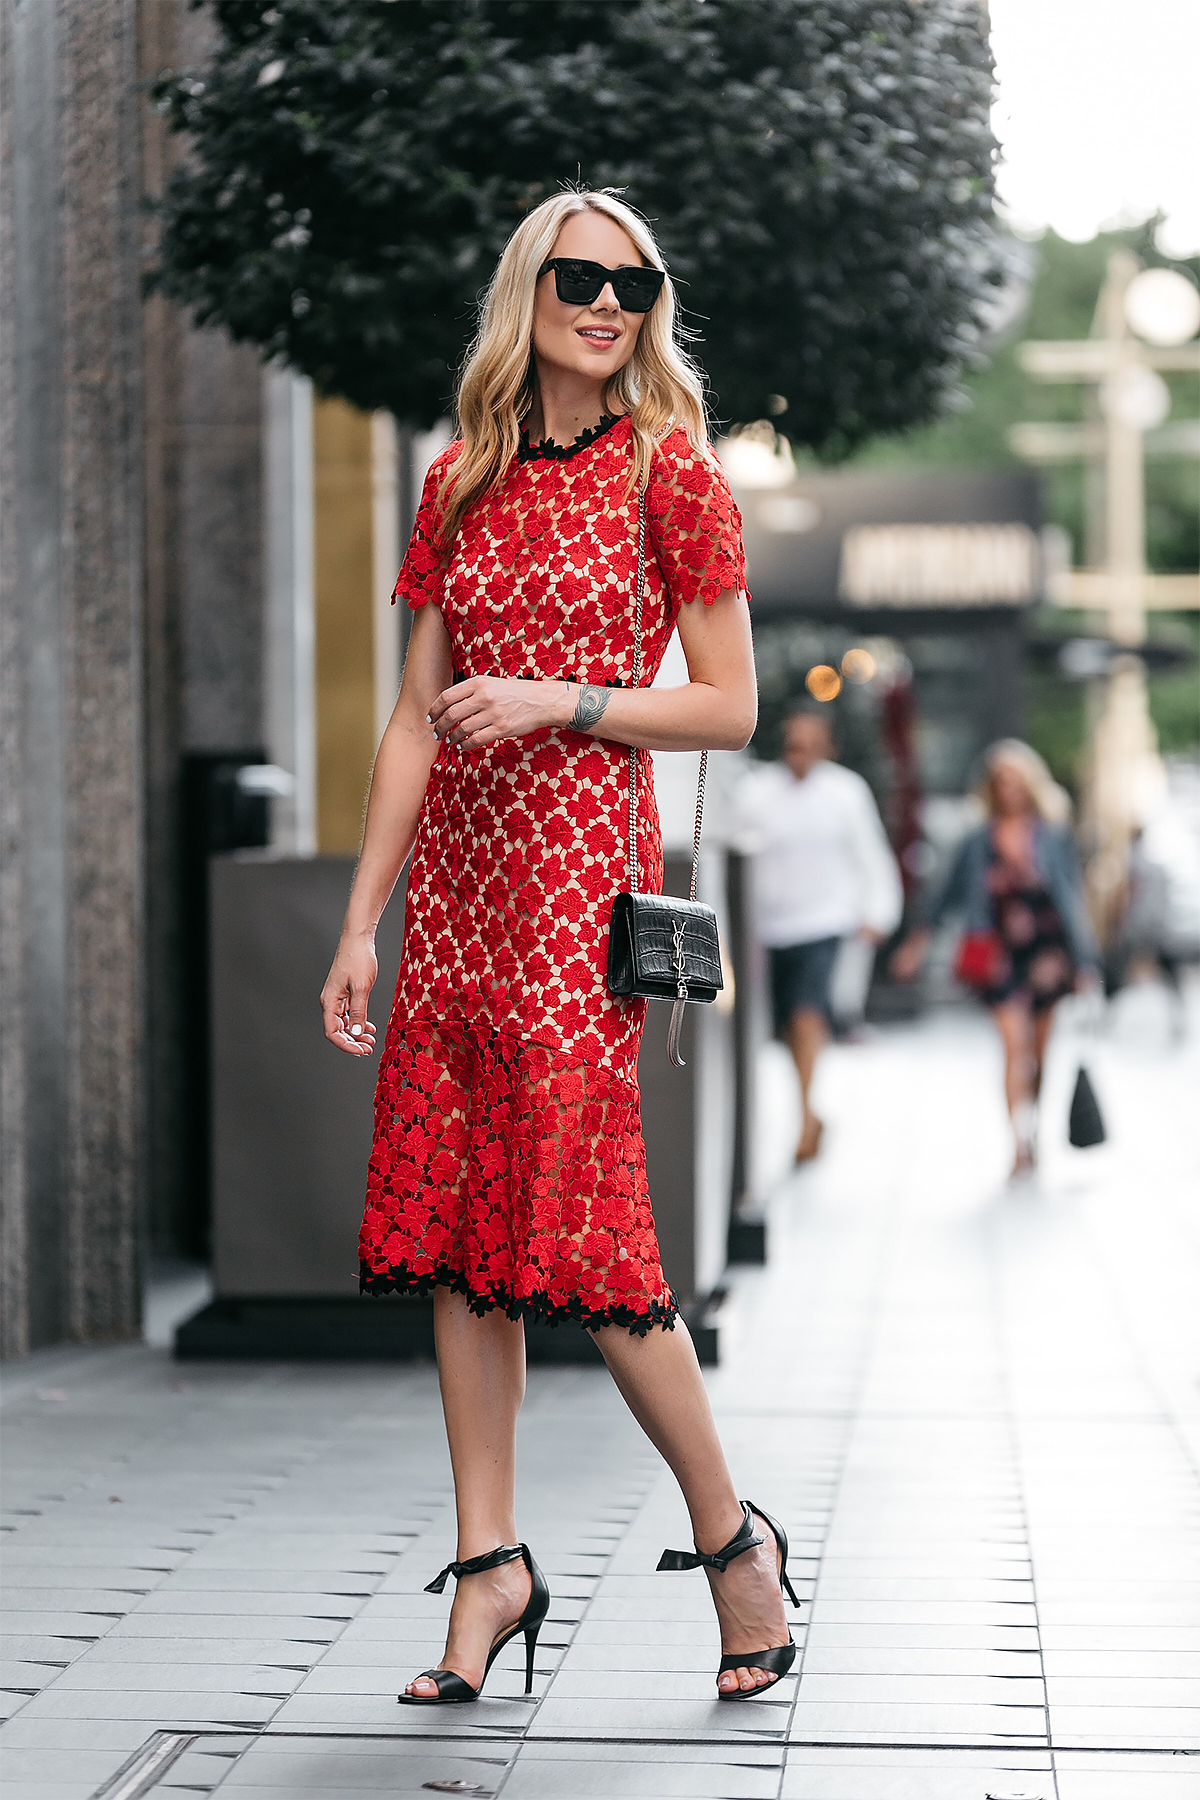 Fashion Jackson, Dallas Blogger, Fashion Blogger, Street Style, Jill Stuart Floral Red Lace Dress, Black Ankle Strap Bow Heels, Saint Laurent Monogram Handbag